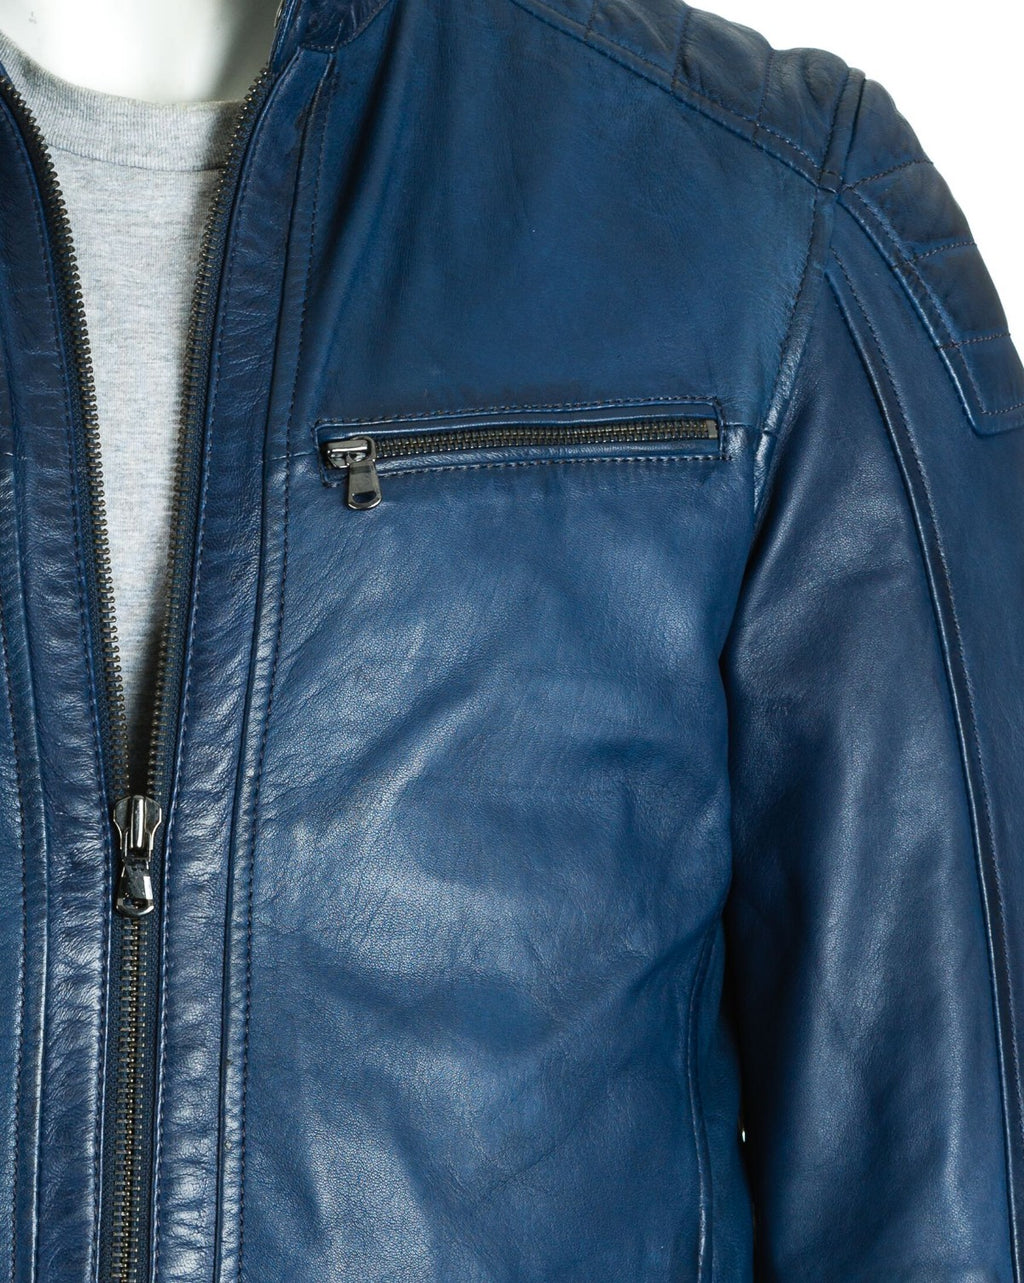 Men's Blue Biker Style Leather Jacket: Calvino